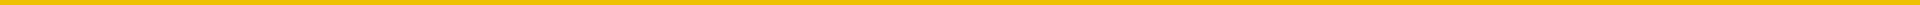 Torresan riga gialla